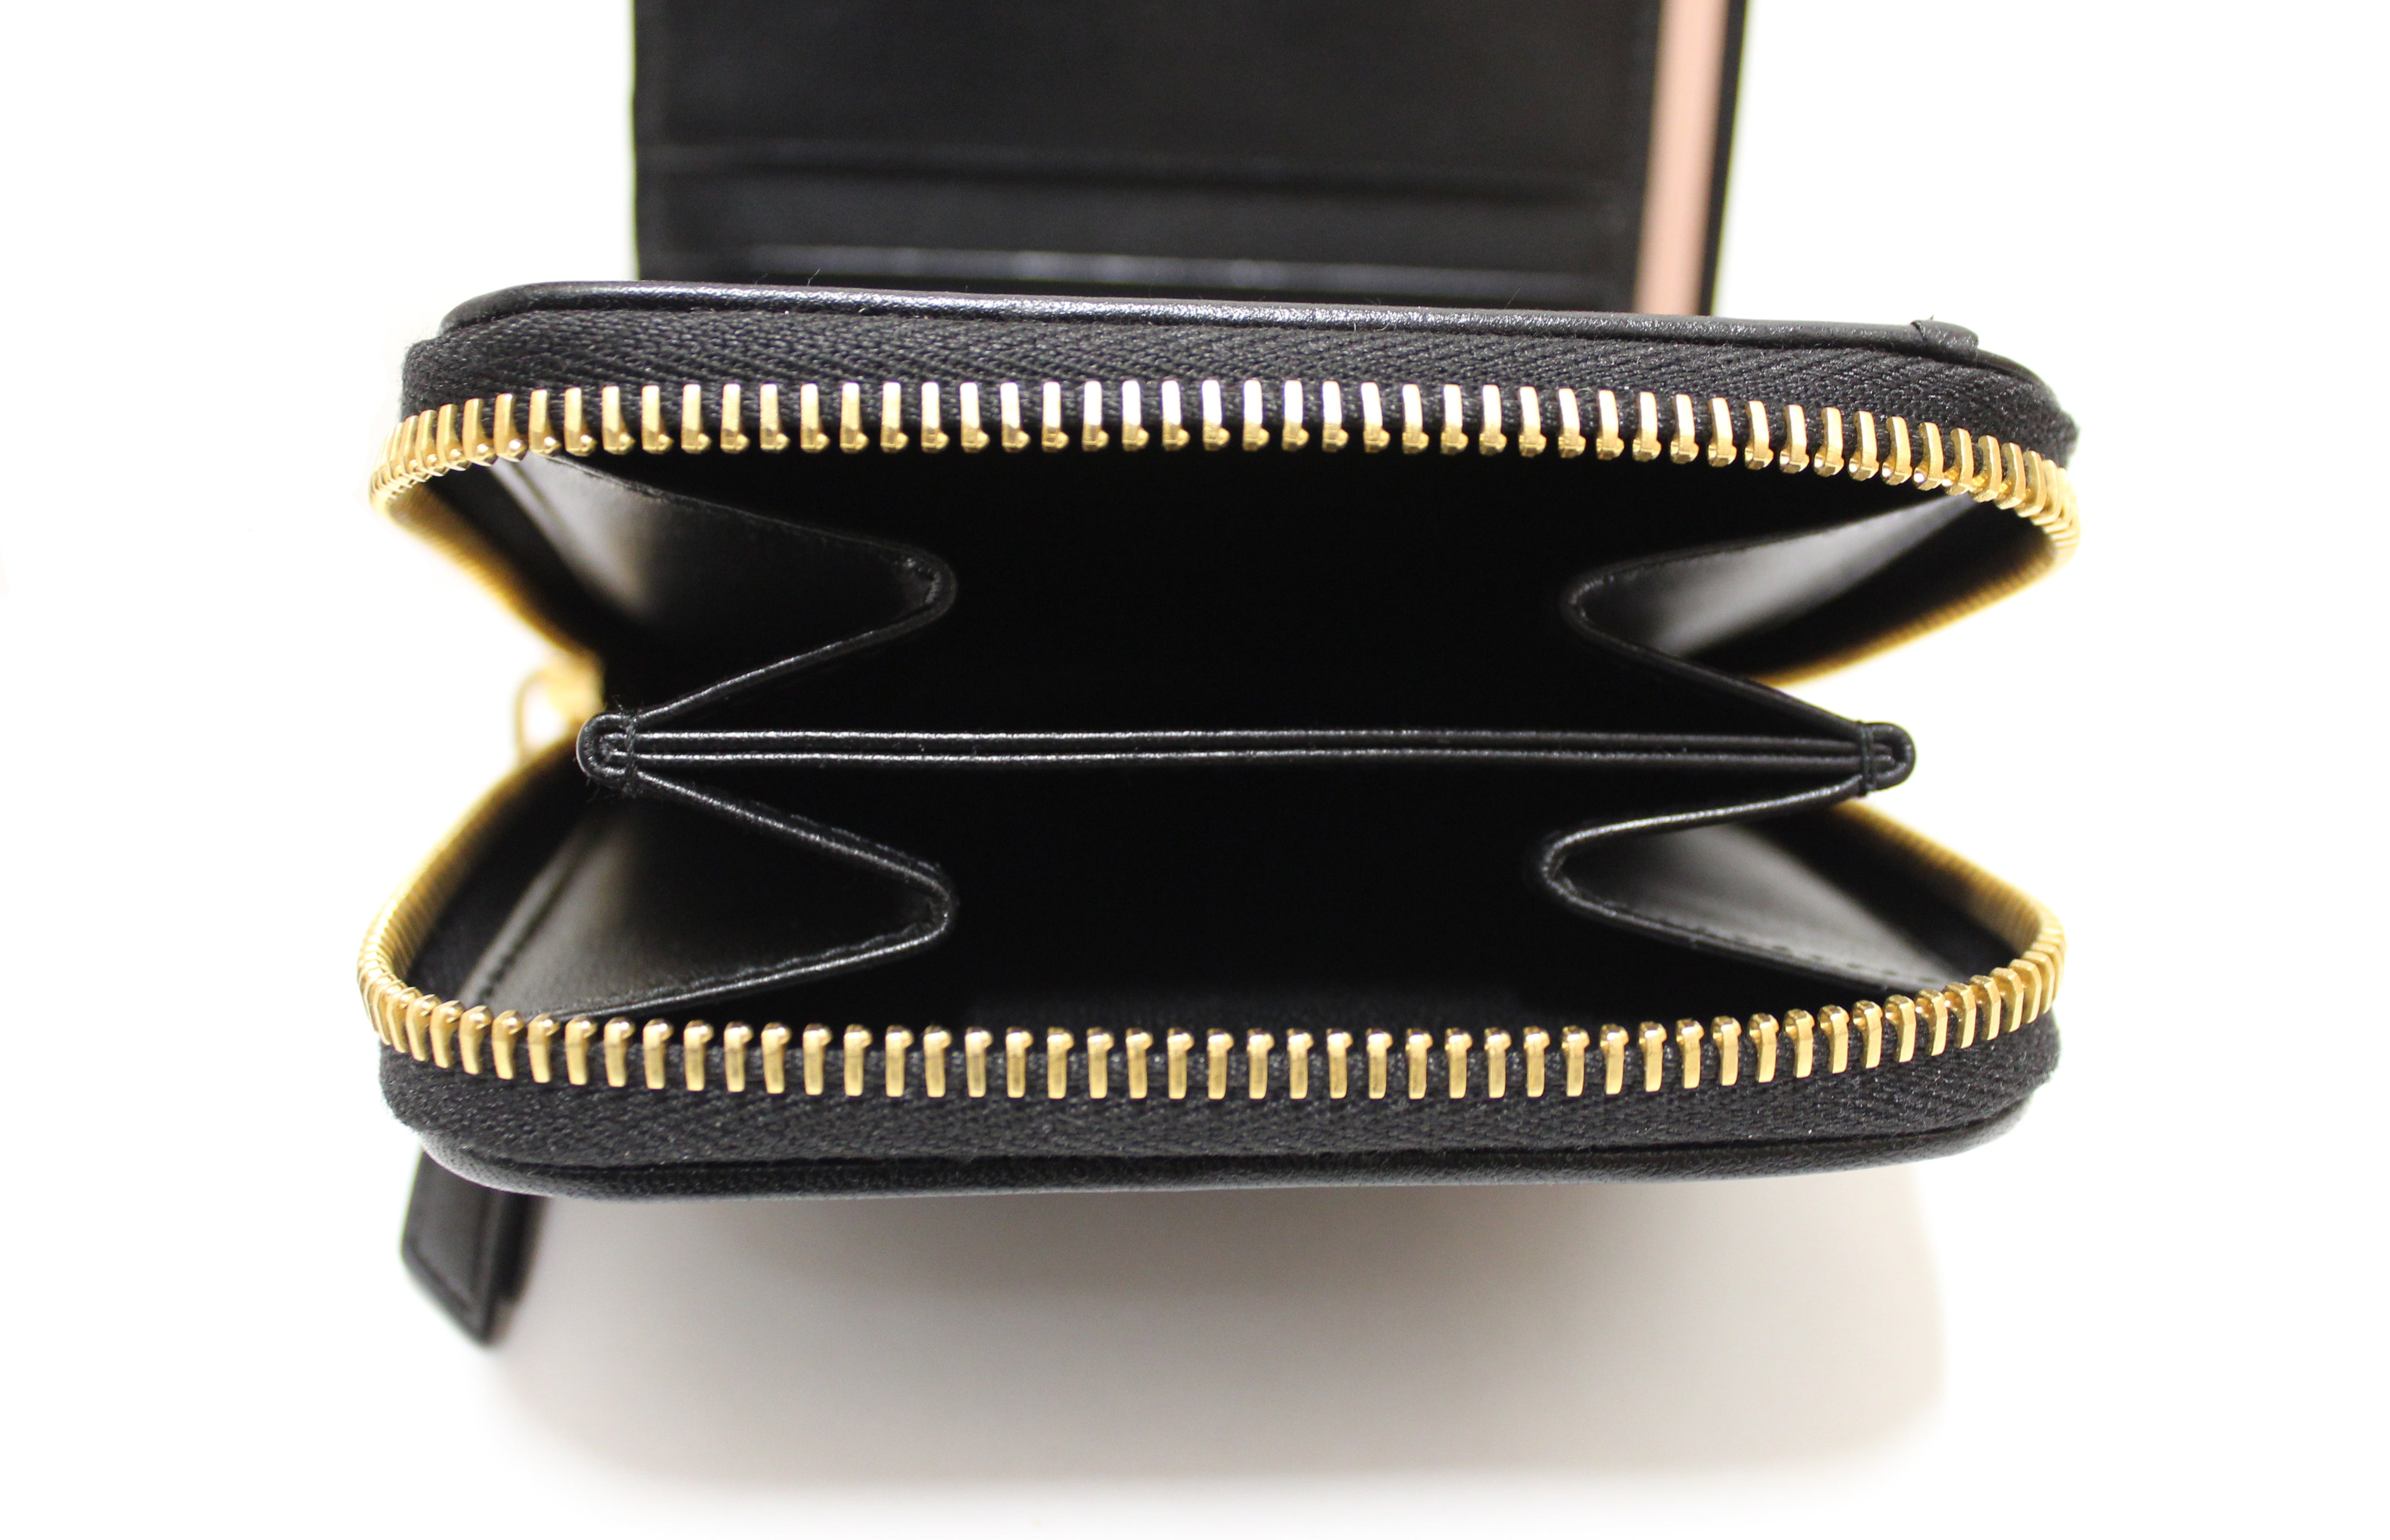 New Authentic Miu Miu Black Nappa Lampo Leather Small Bi-Fold Wallet